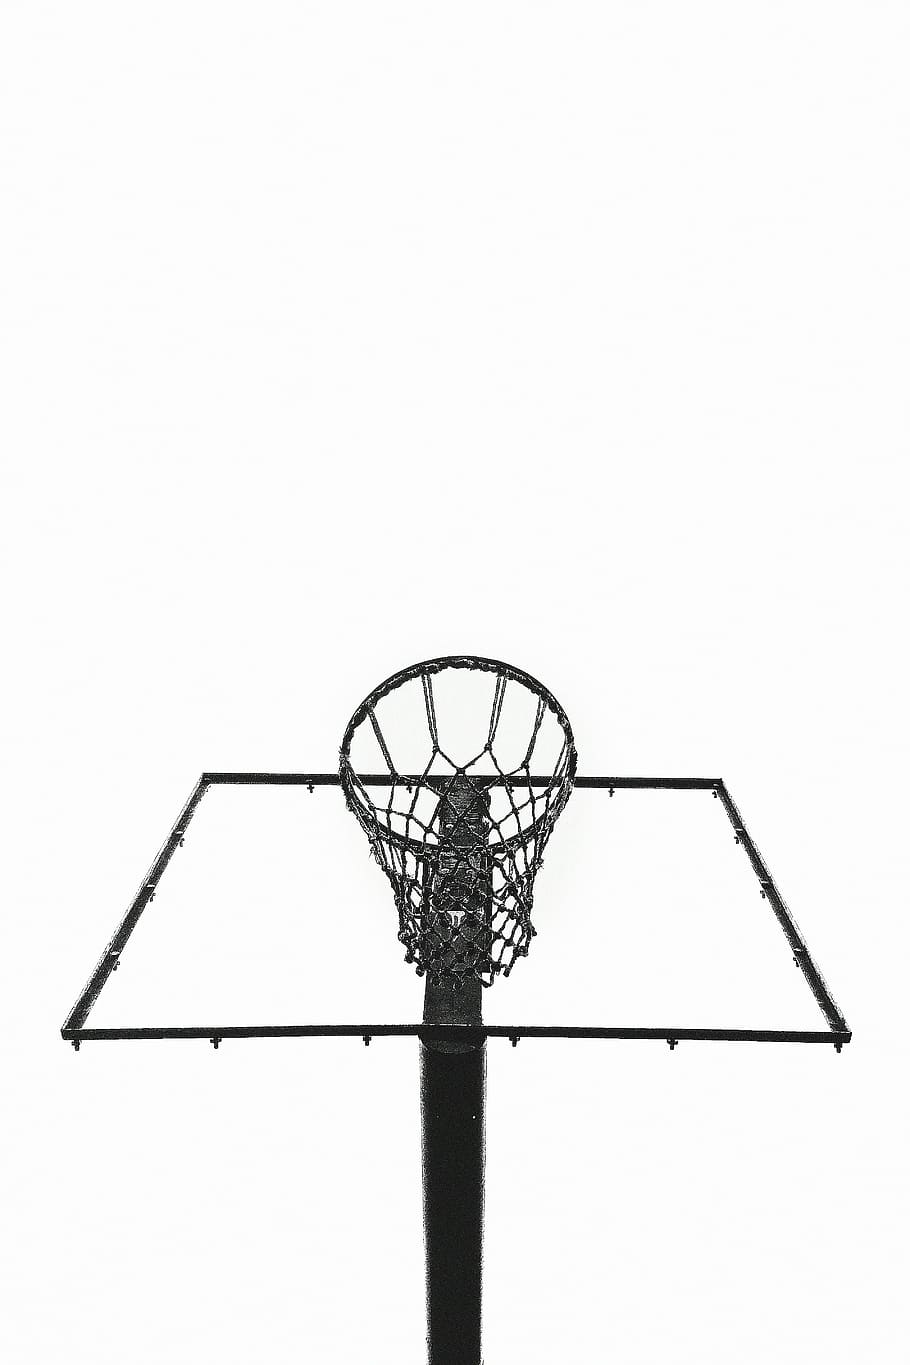 aro de baloncesto negro, negro, acero, enmarcado, baloncesto, aro, red, aros, fitness, deportes